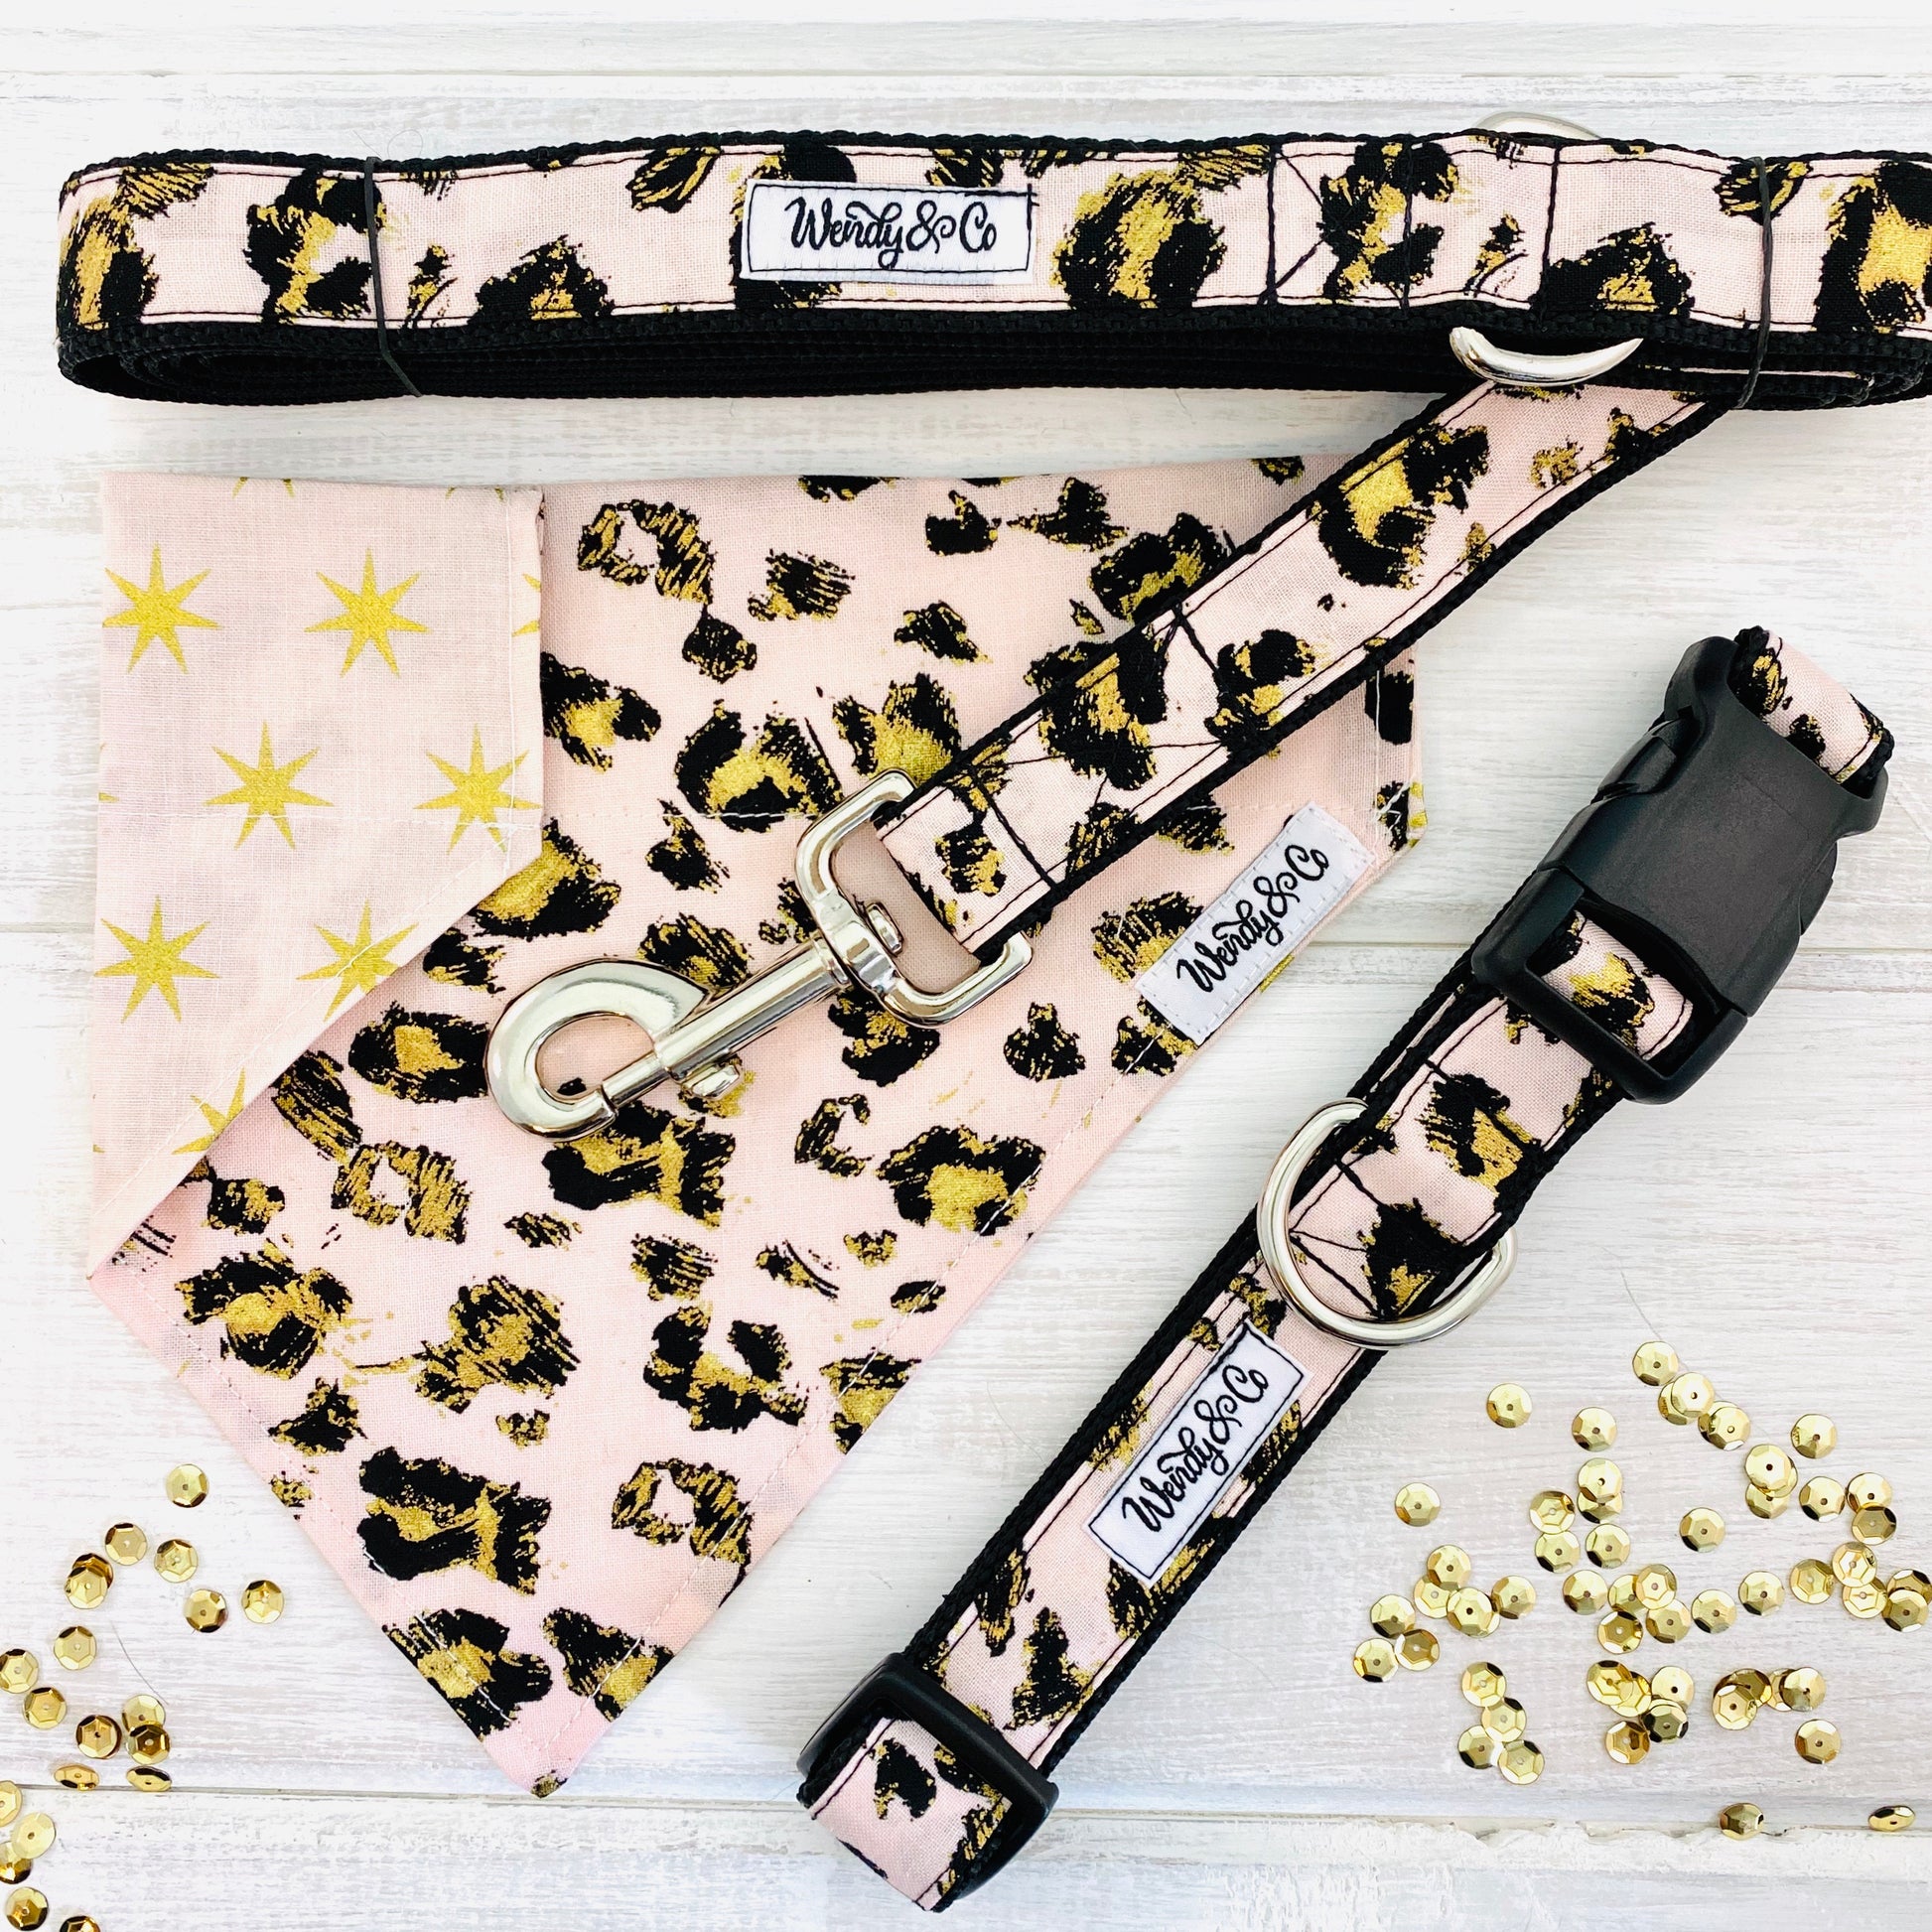 Blush pink cheetah animal print fabric with black and gold accents reversible dog bandana, leash, collar.